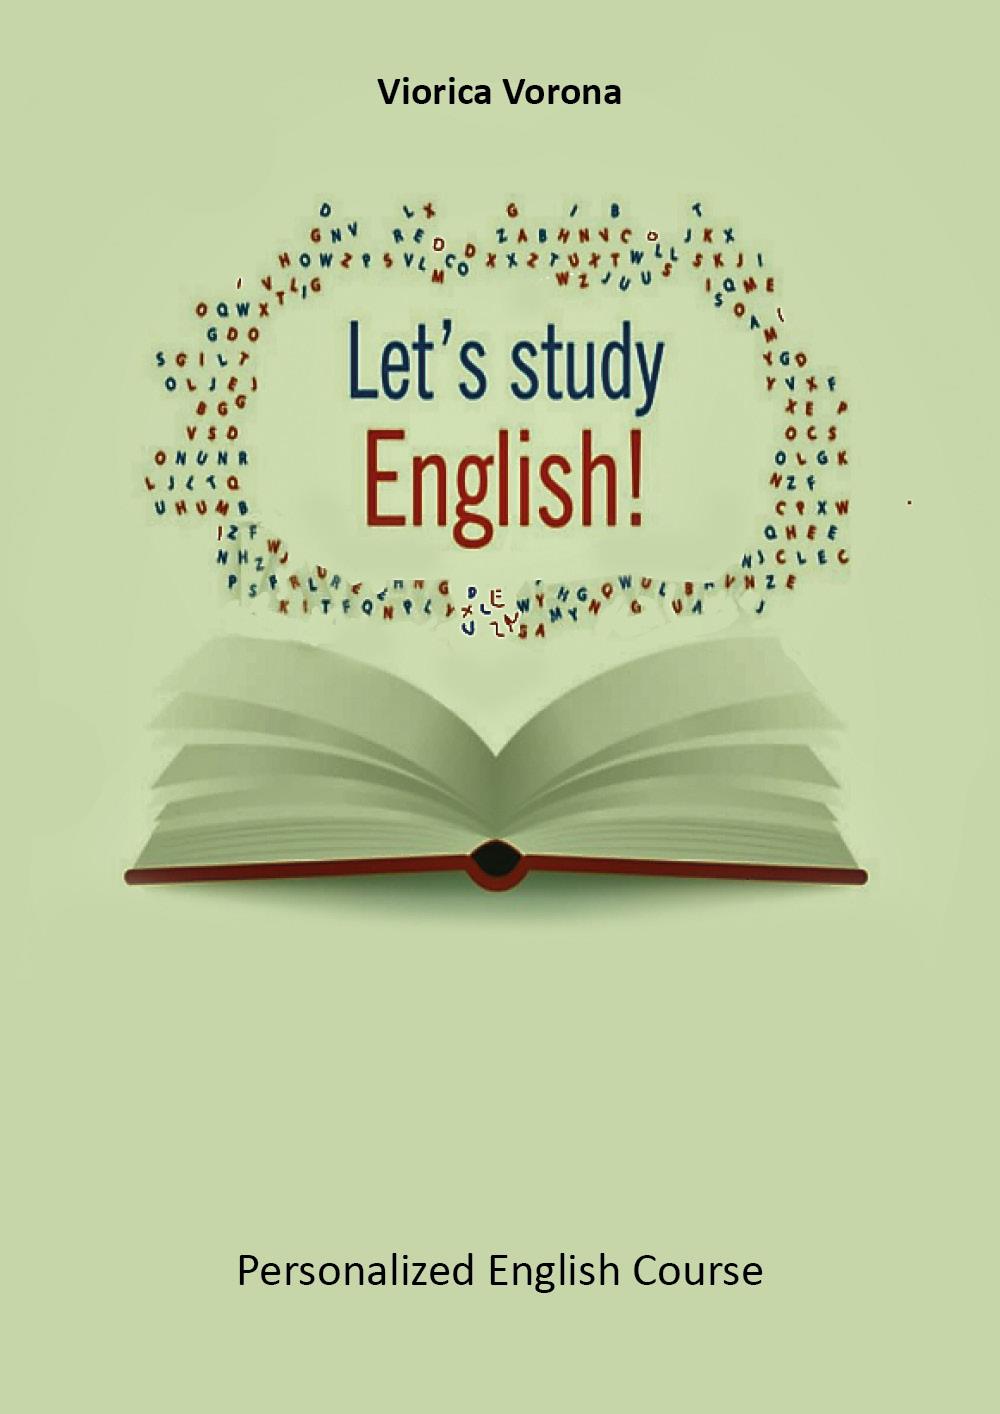 Let's study English